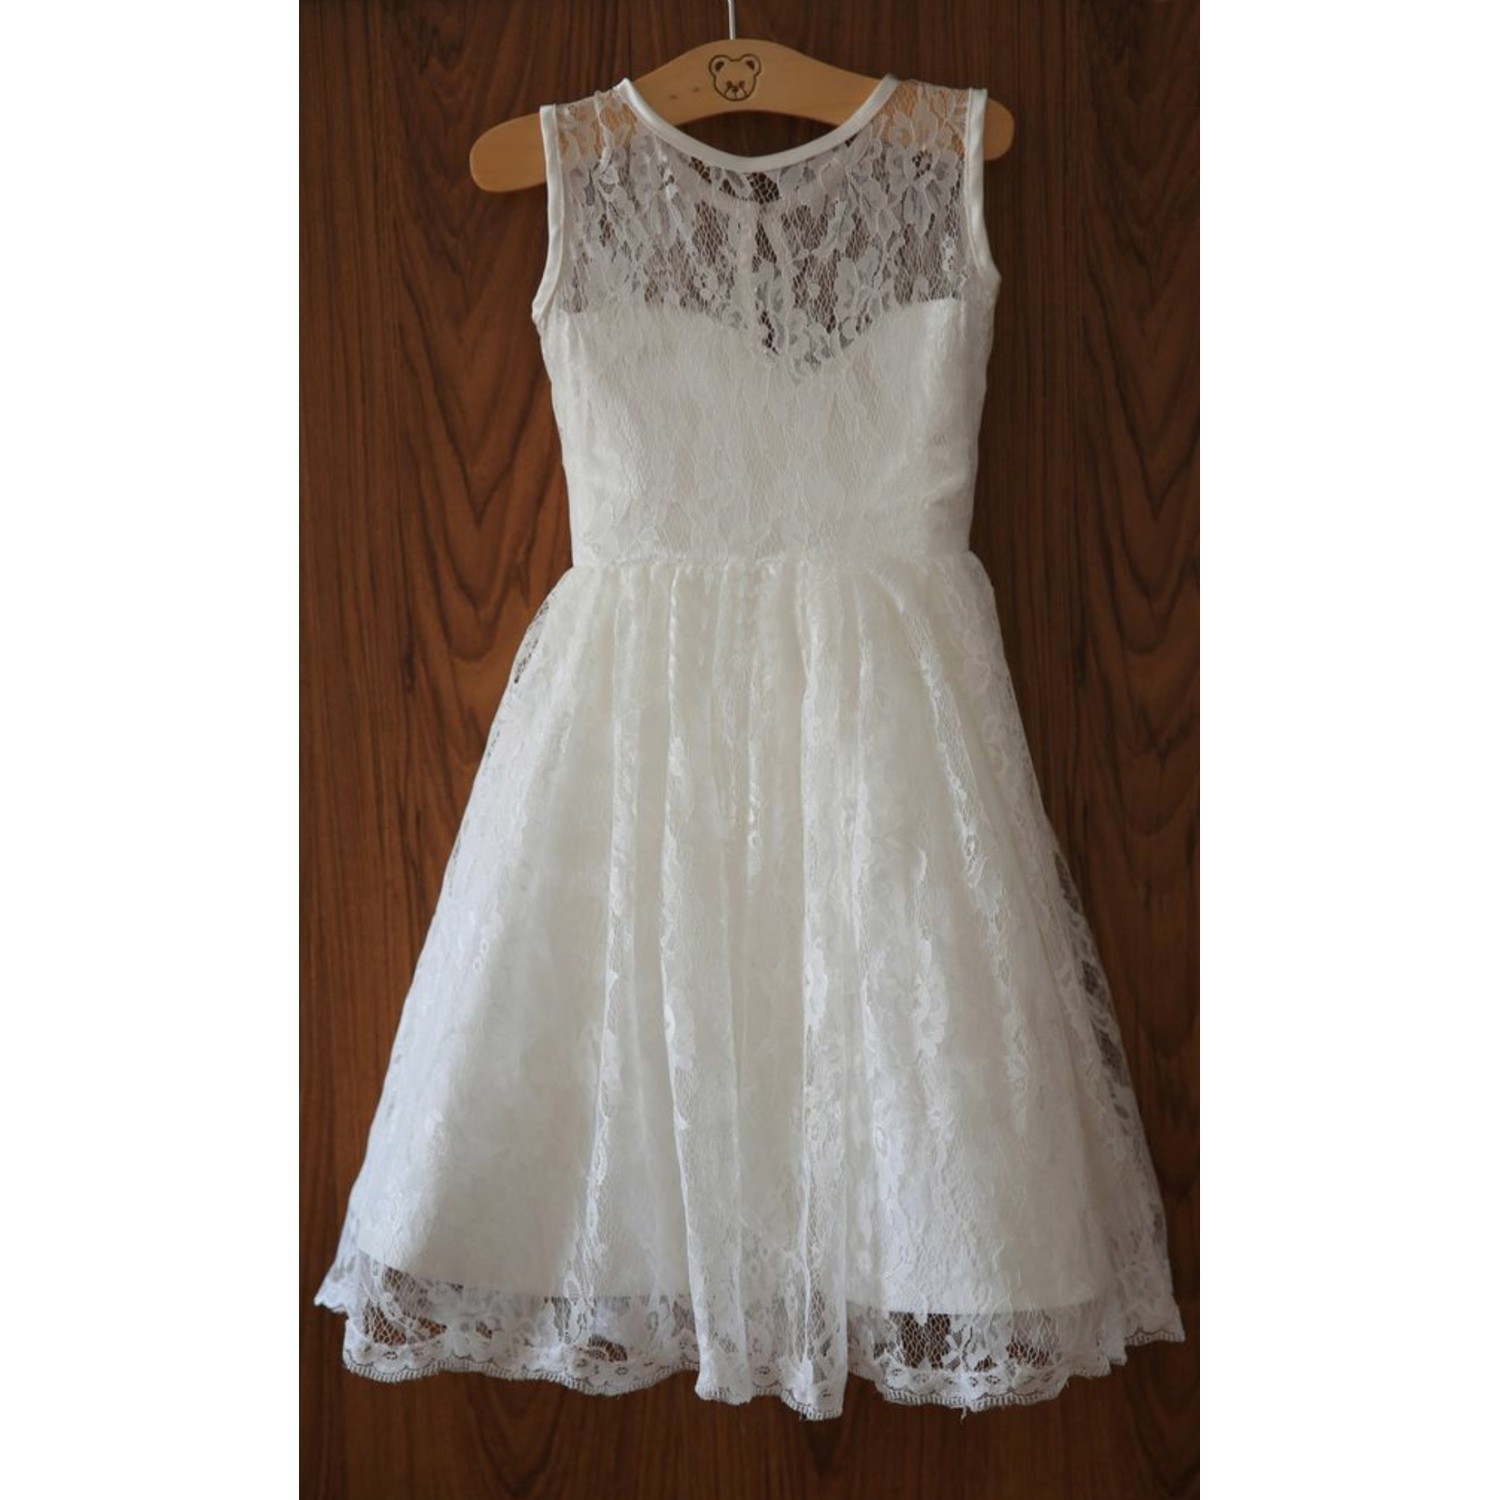 High Quality White Lace Flower Girl Dress/Birthday Girl Dress